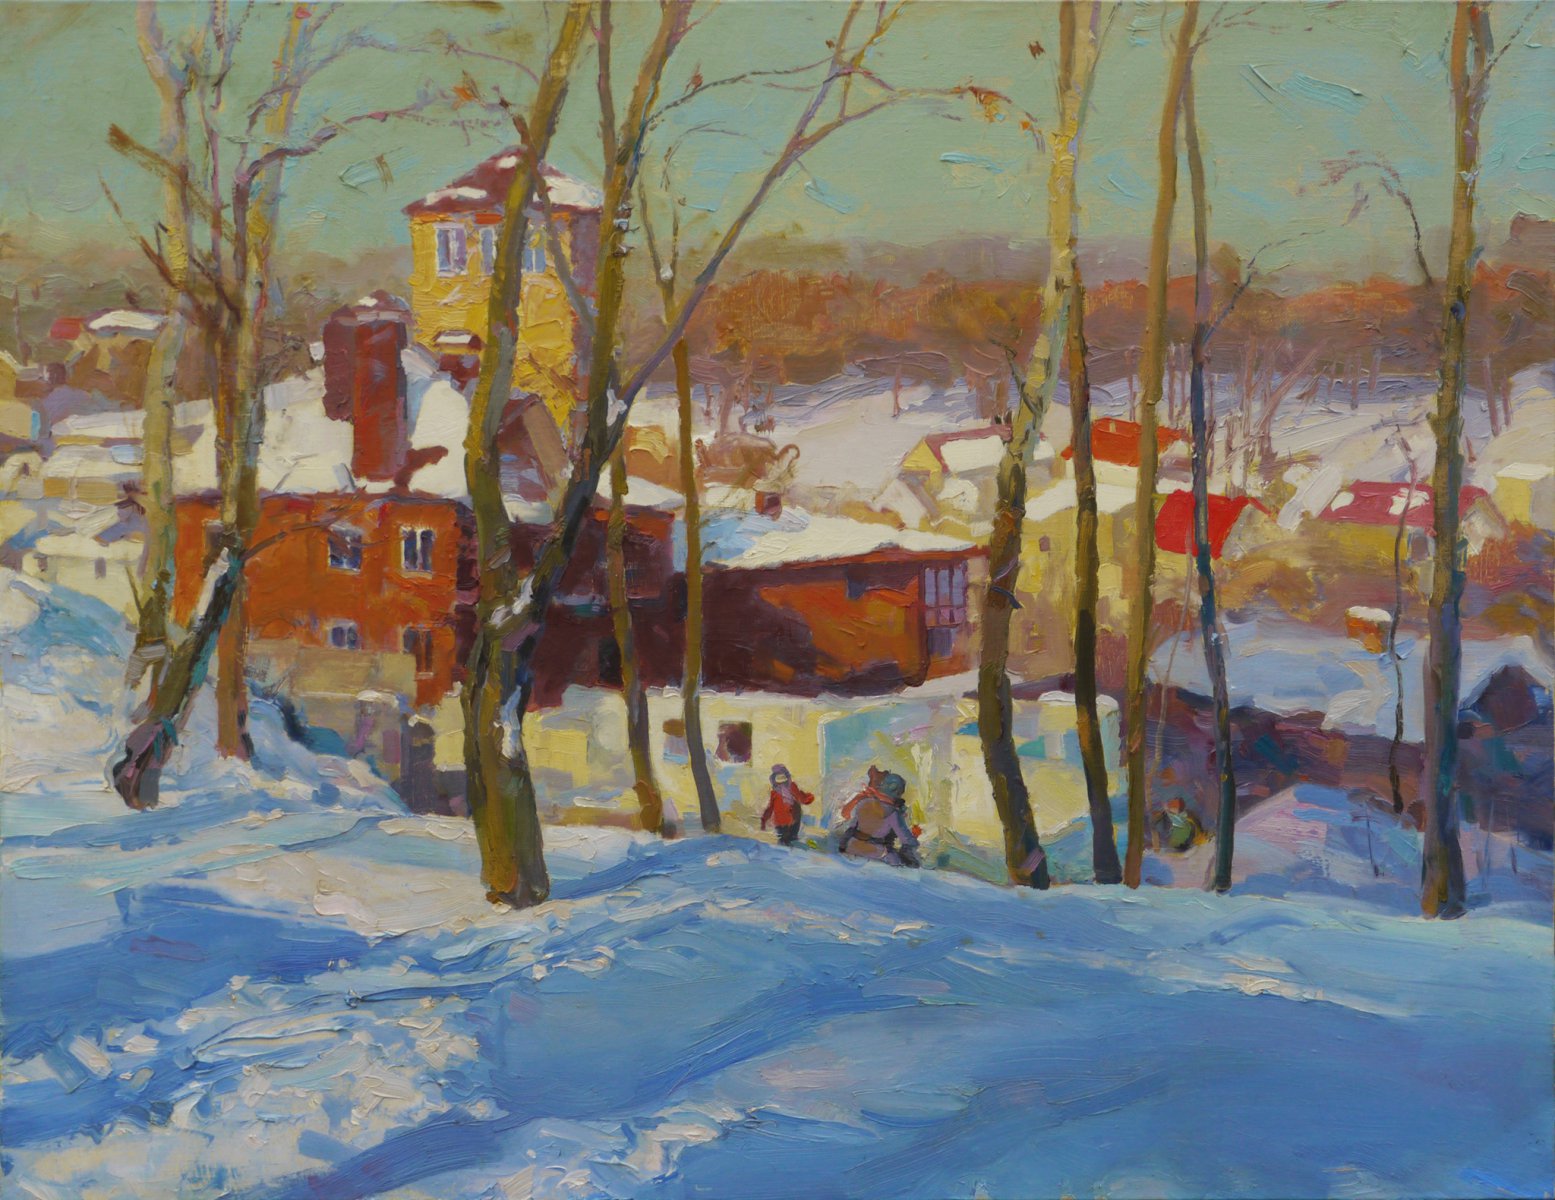 Winter on Kristers mountine - Victor Onyshchenko